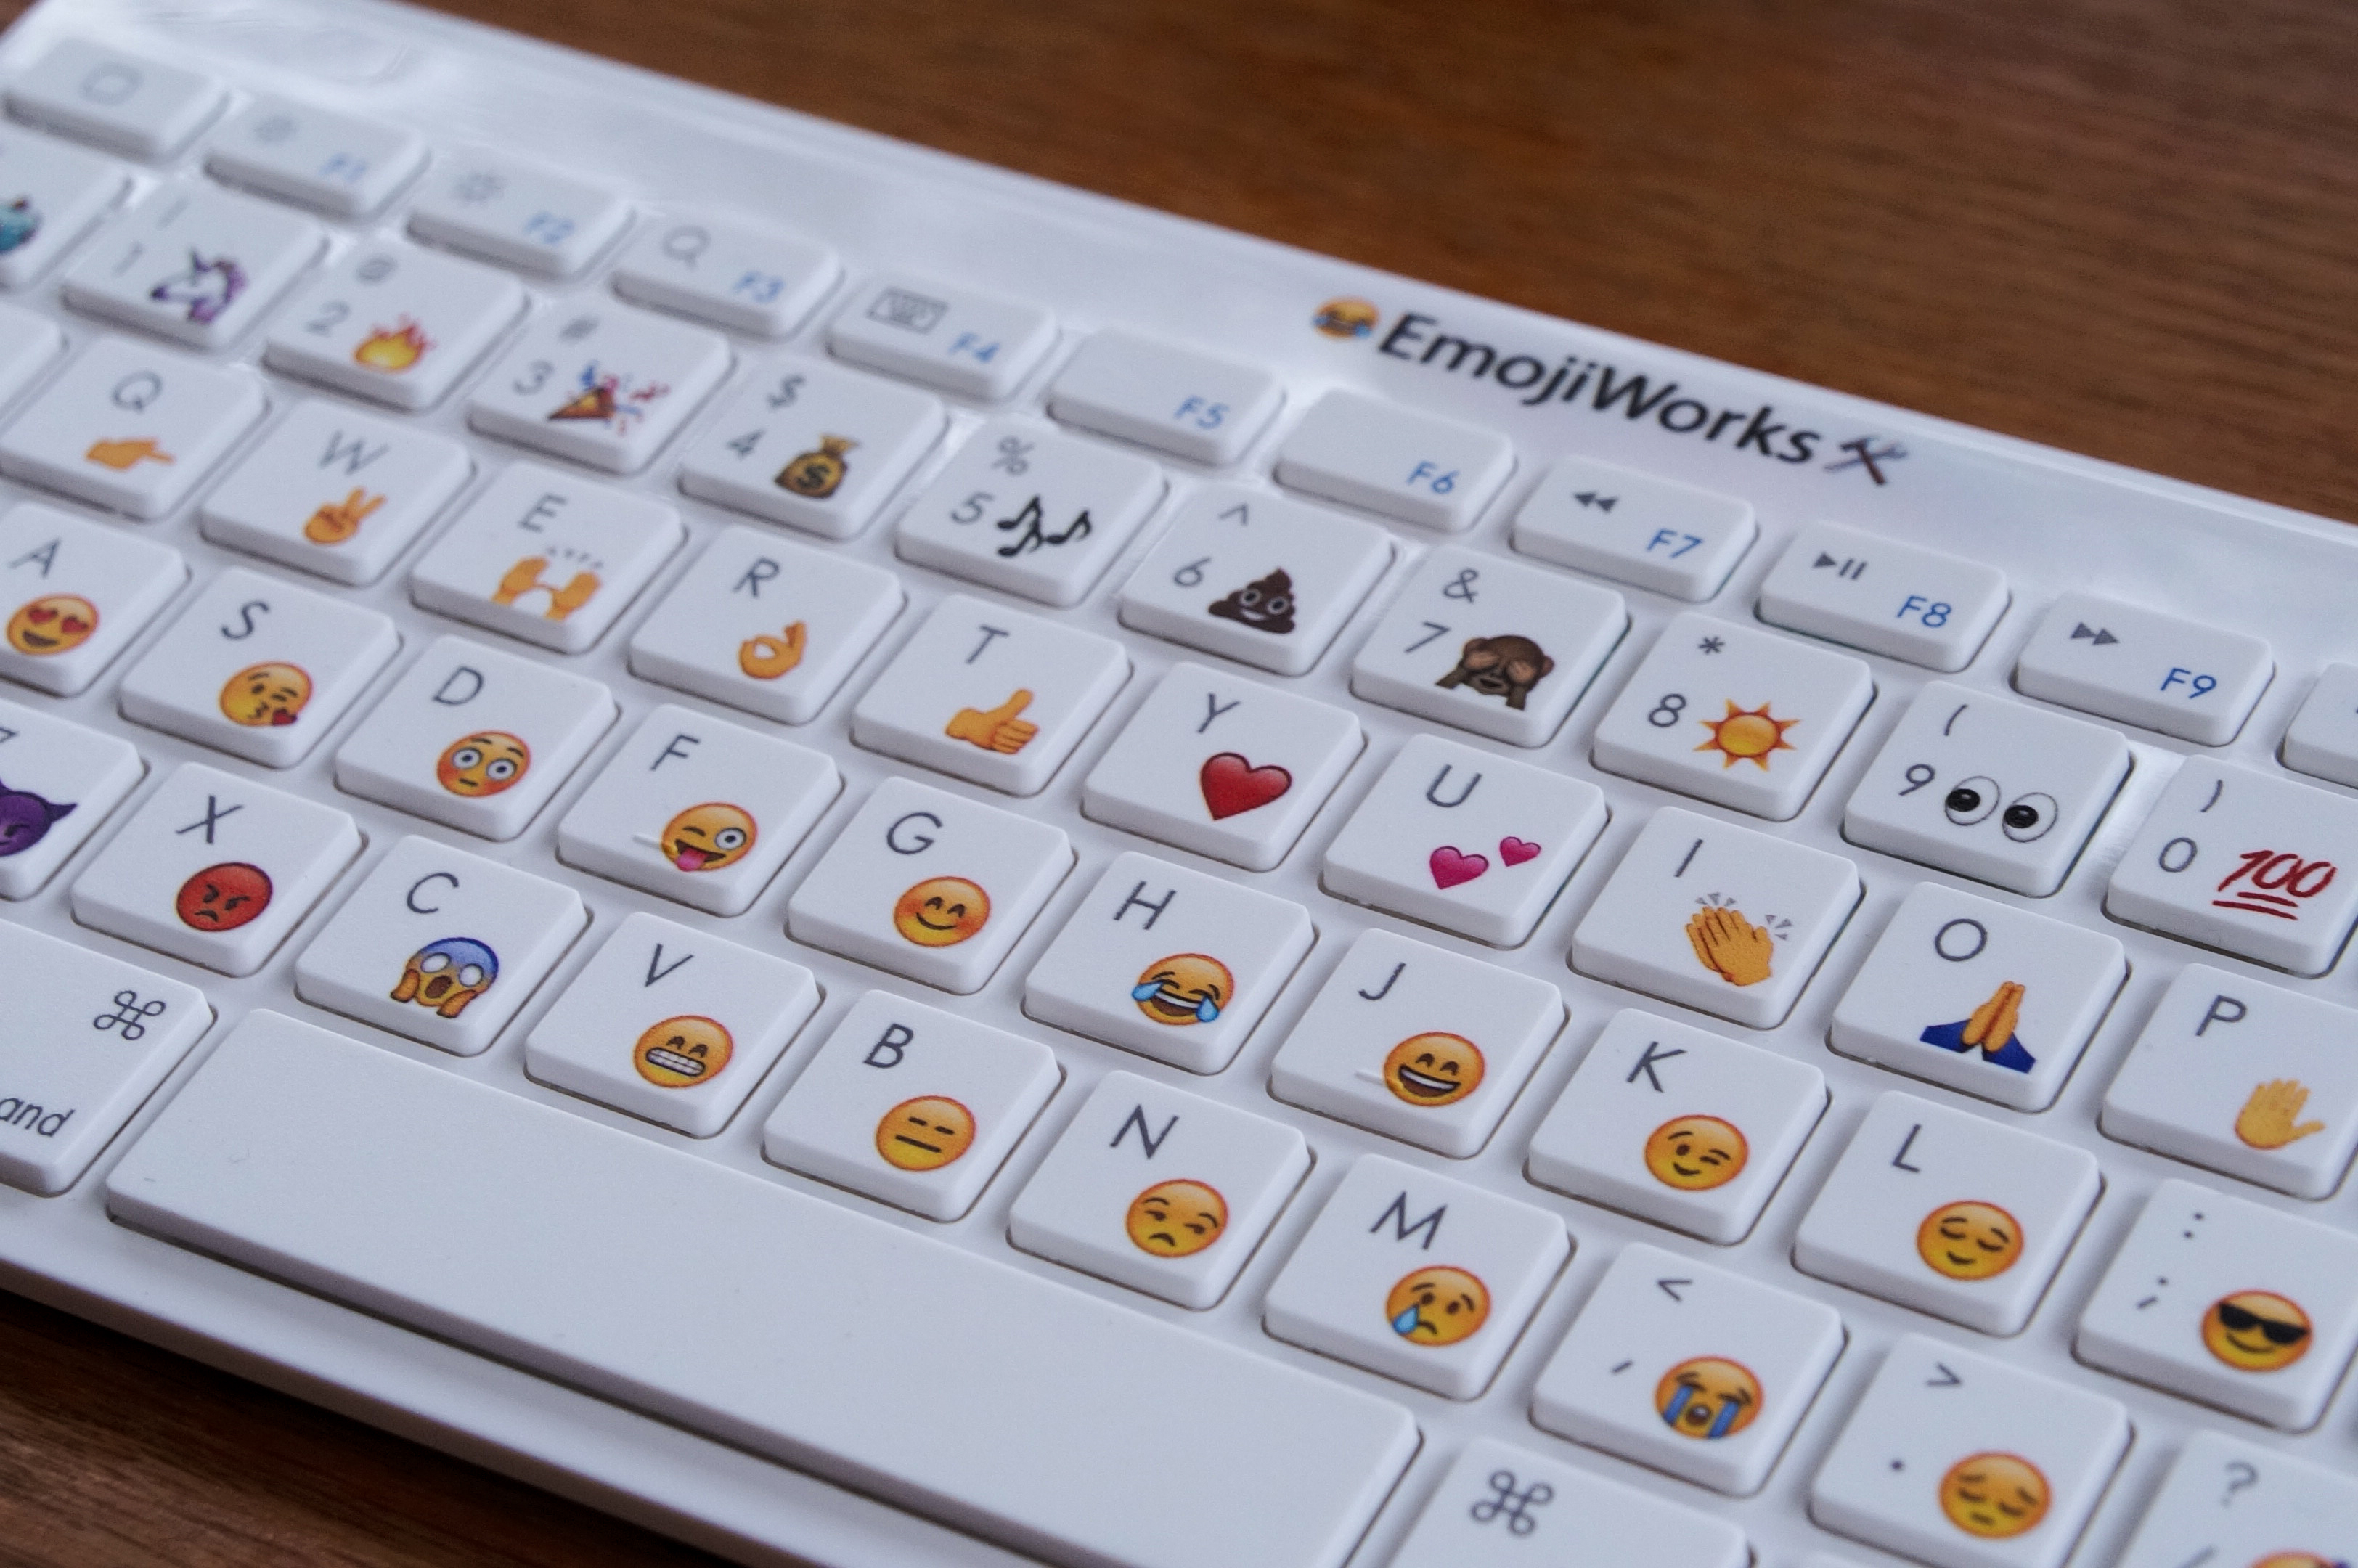 Смайлы на компьютере. Клавиатура Emoji Keyboard. ЭМОДЖИ кейборд. Смайлики из клавиатуры. Смешные клавиатуры.